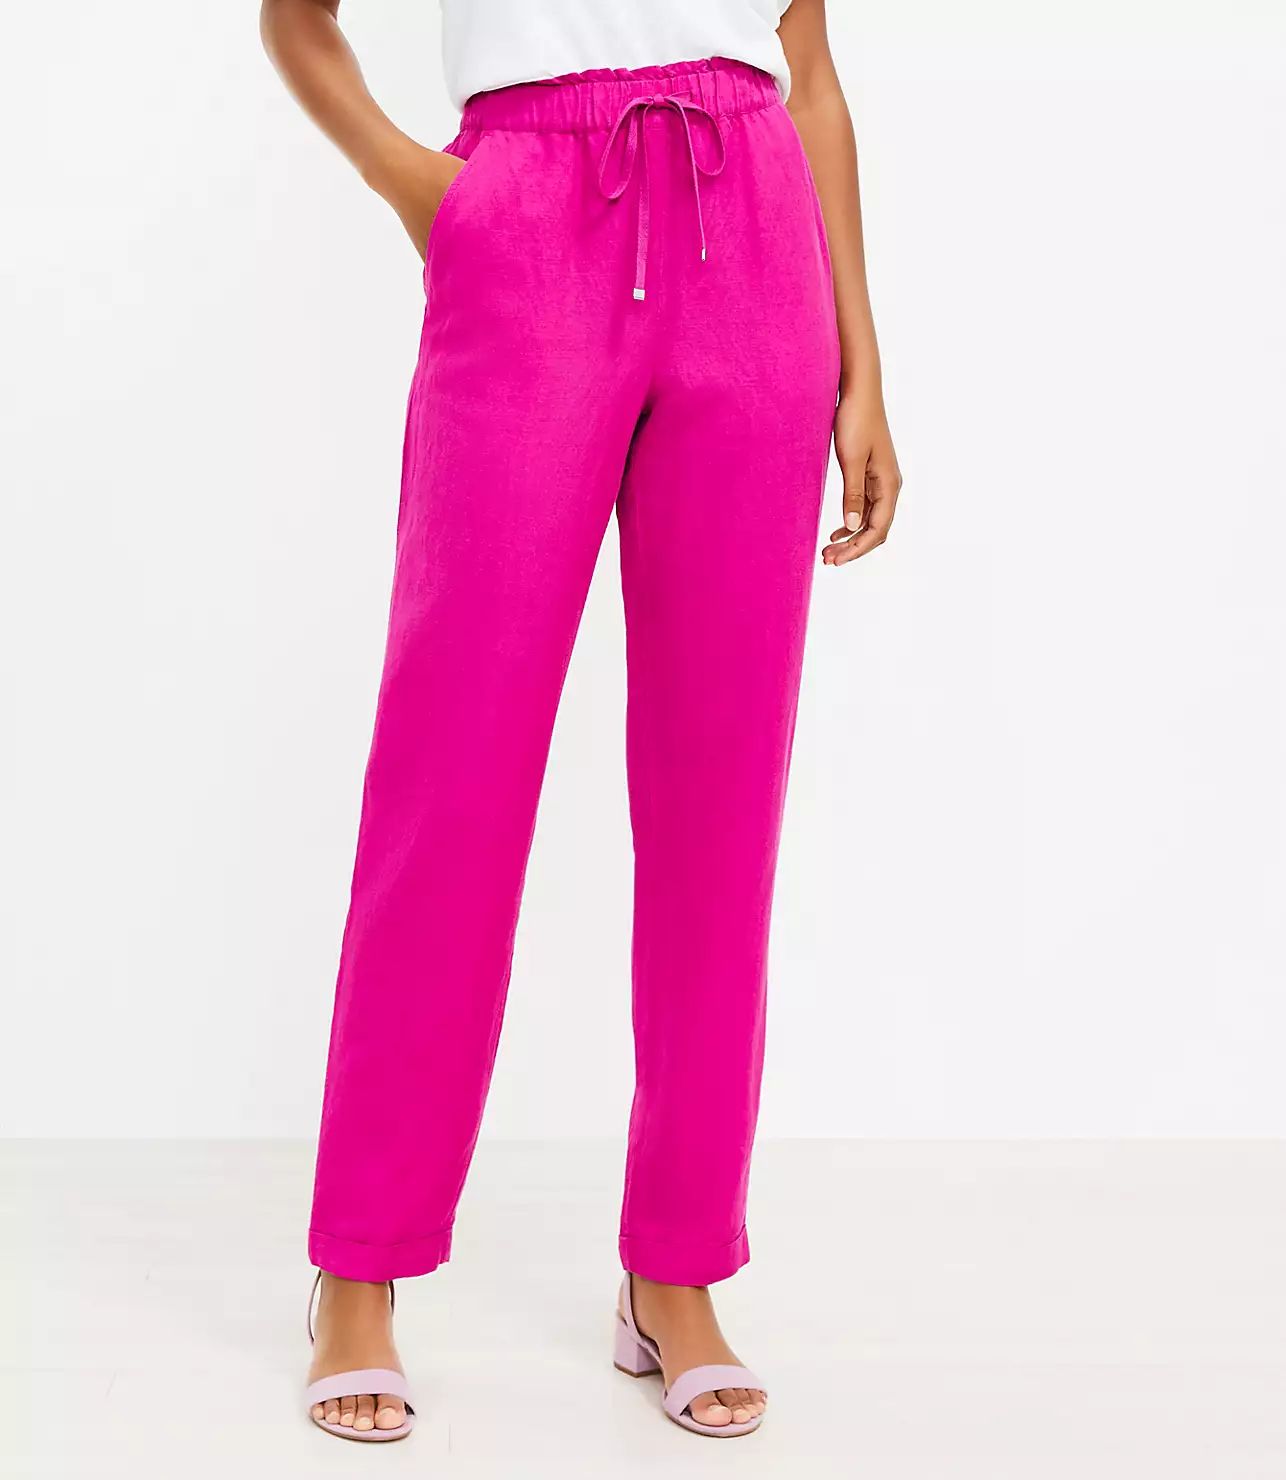 Petite Emory Taper Pants in Linen Blend | LOFT